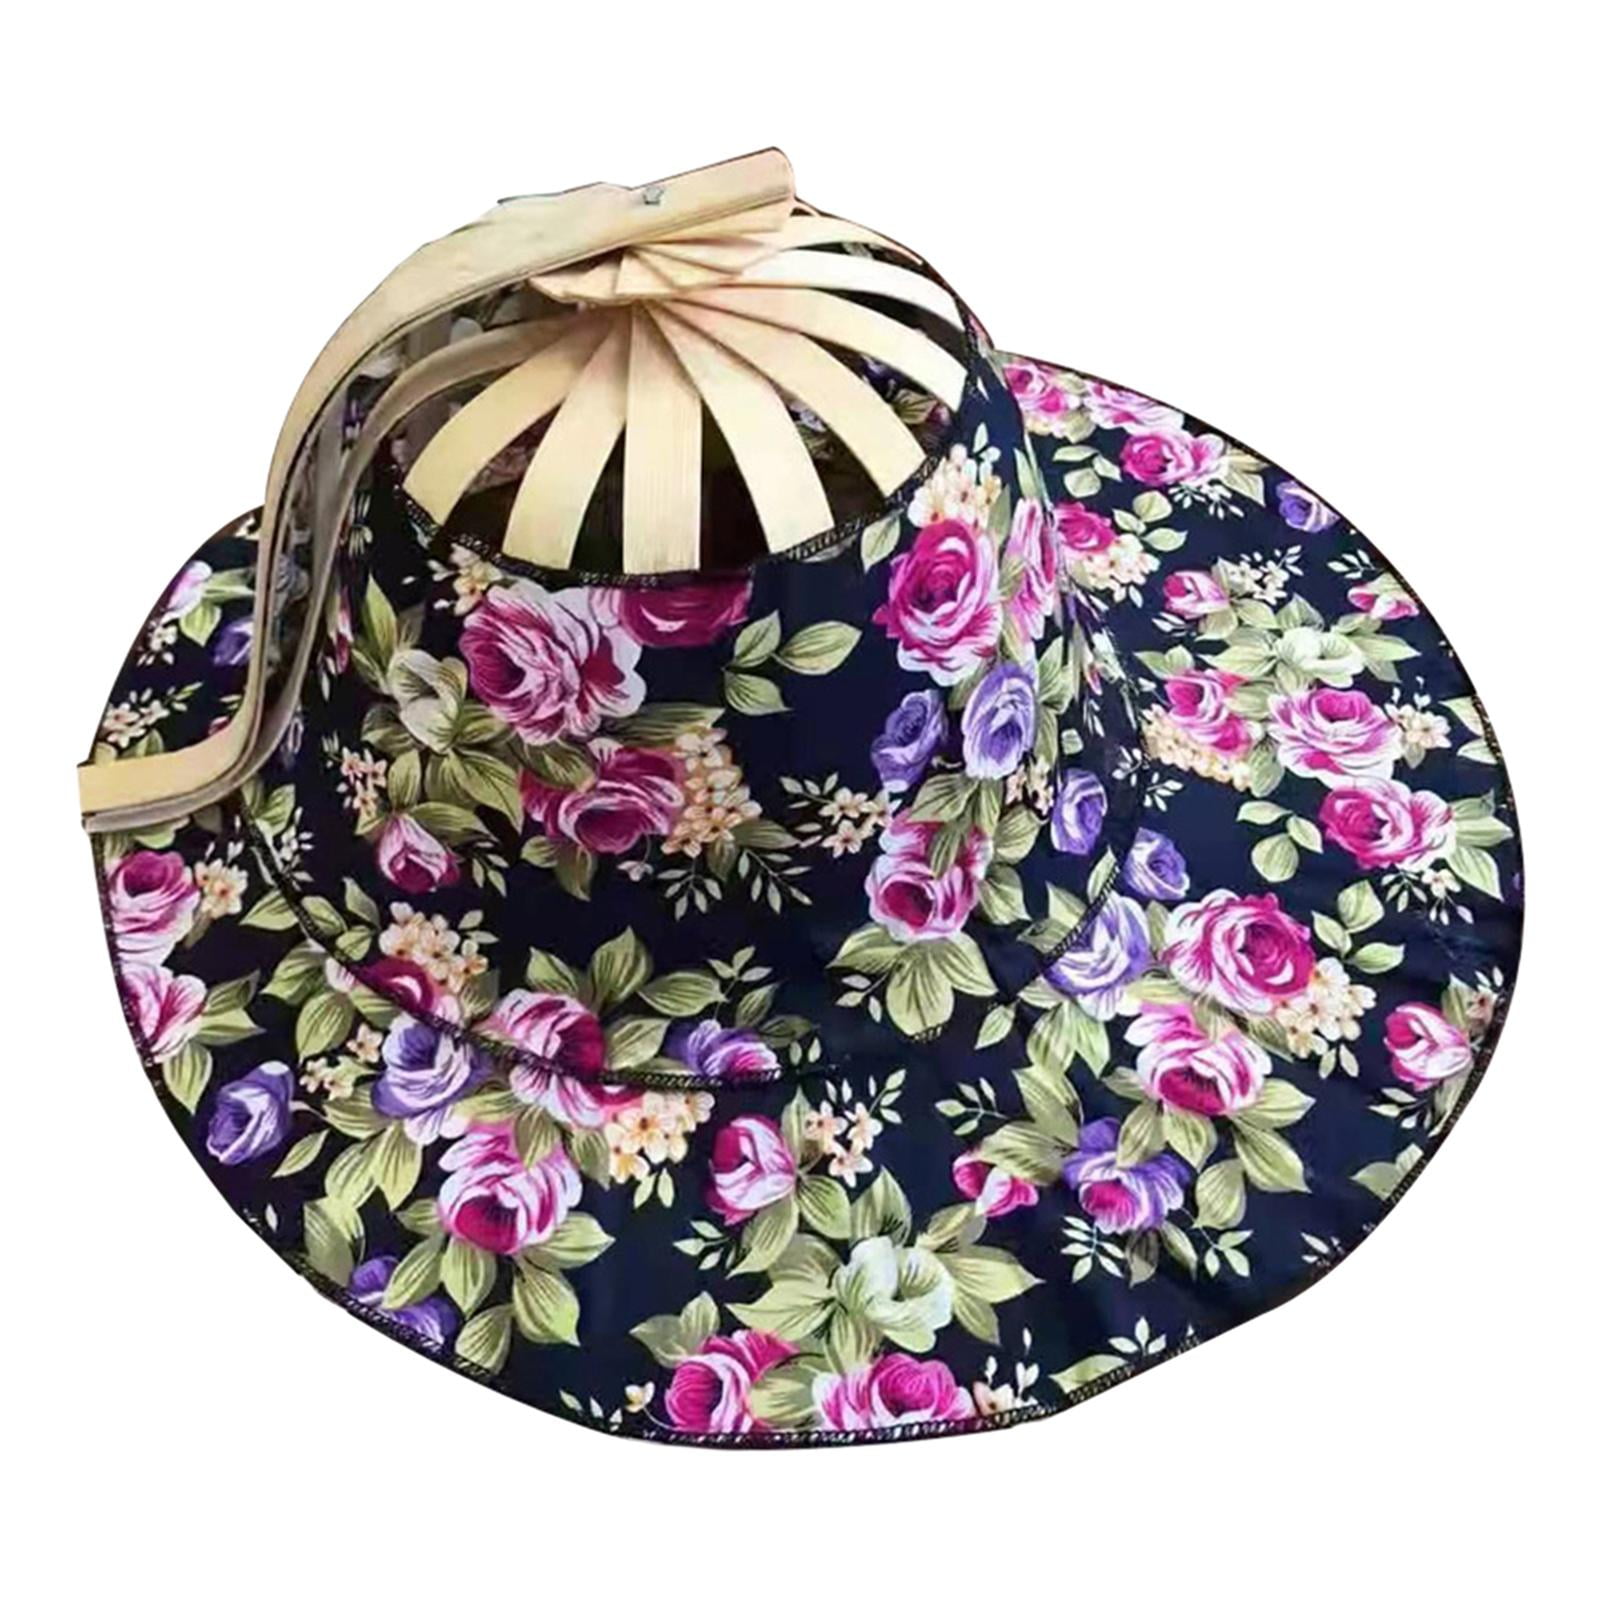 Segolike Bamboo Fan Foldable Sun Hat, Wide Brim, Fashion, Portable